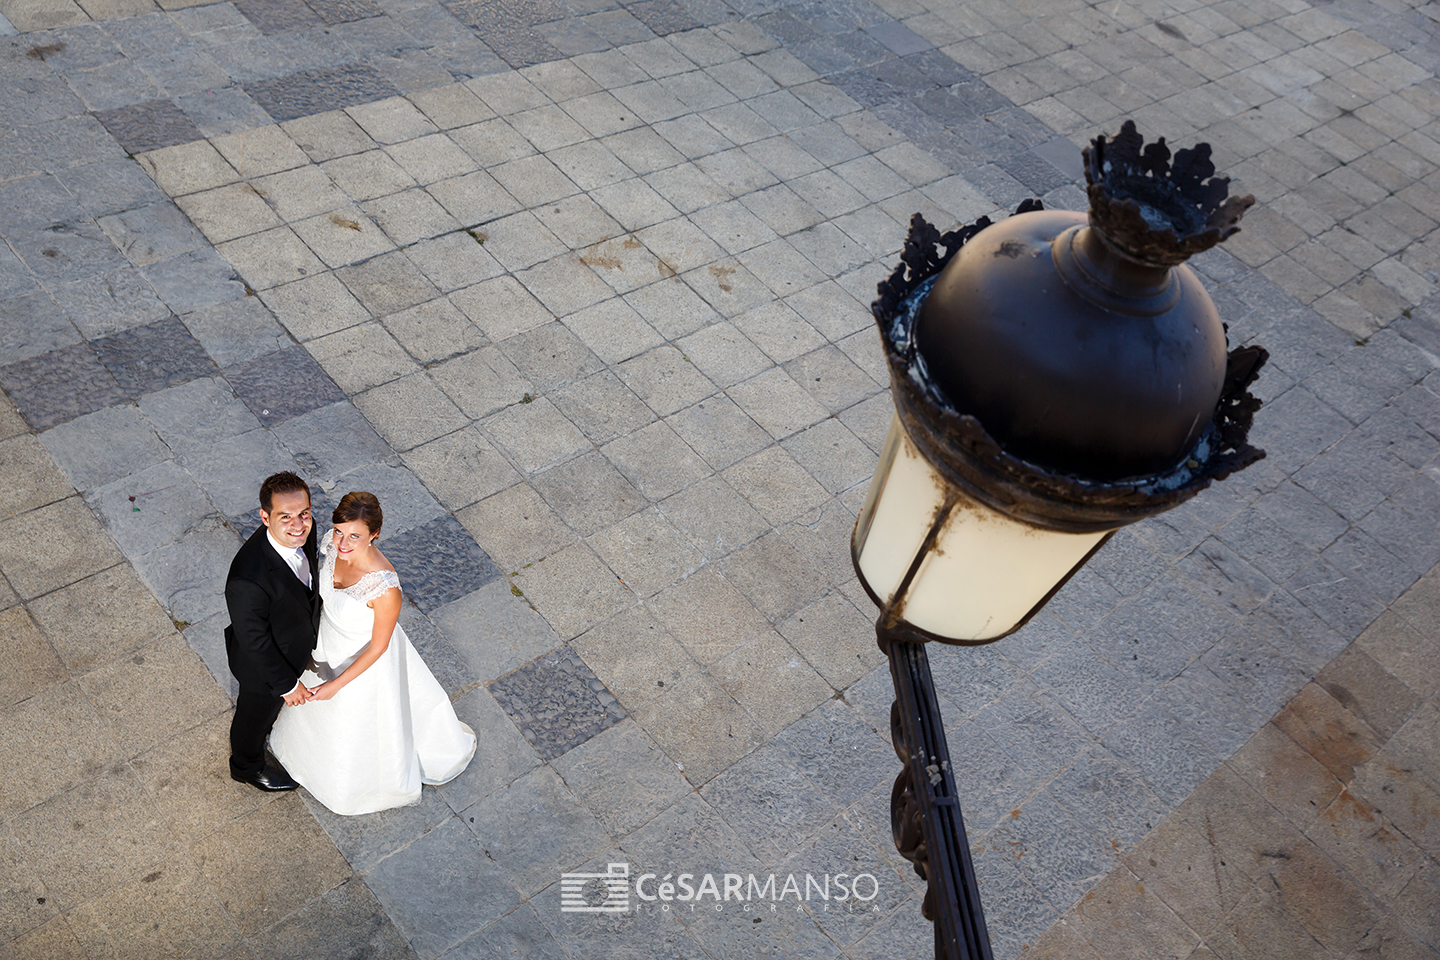 César Manso Fotógrafo: Fotógrafos de boda en Burgos - Boda%20AlejandrayJairo-25.JPG